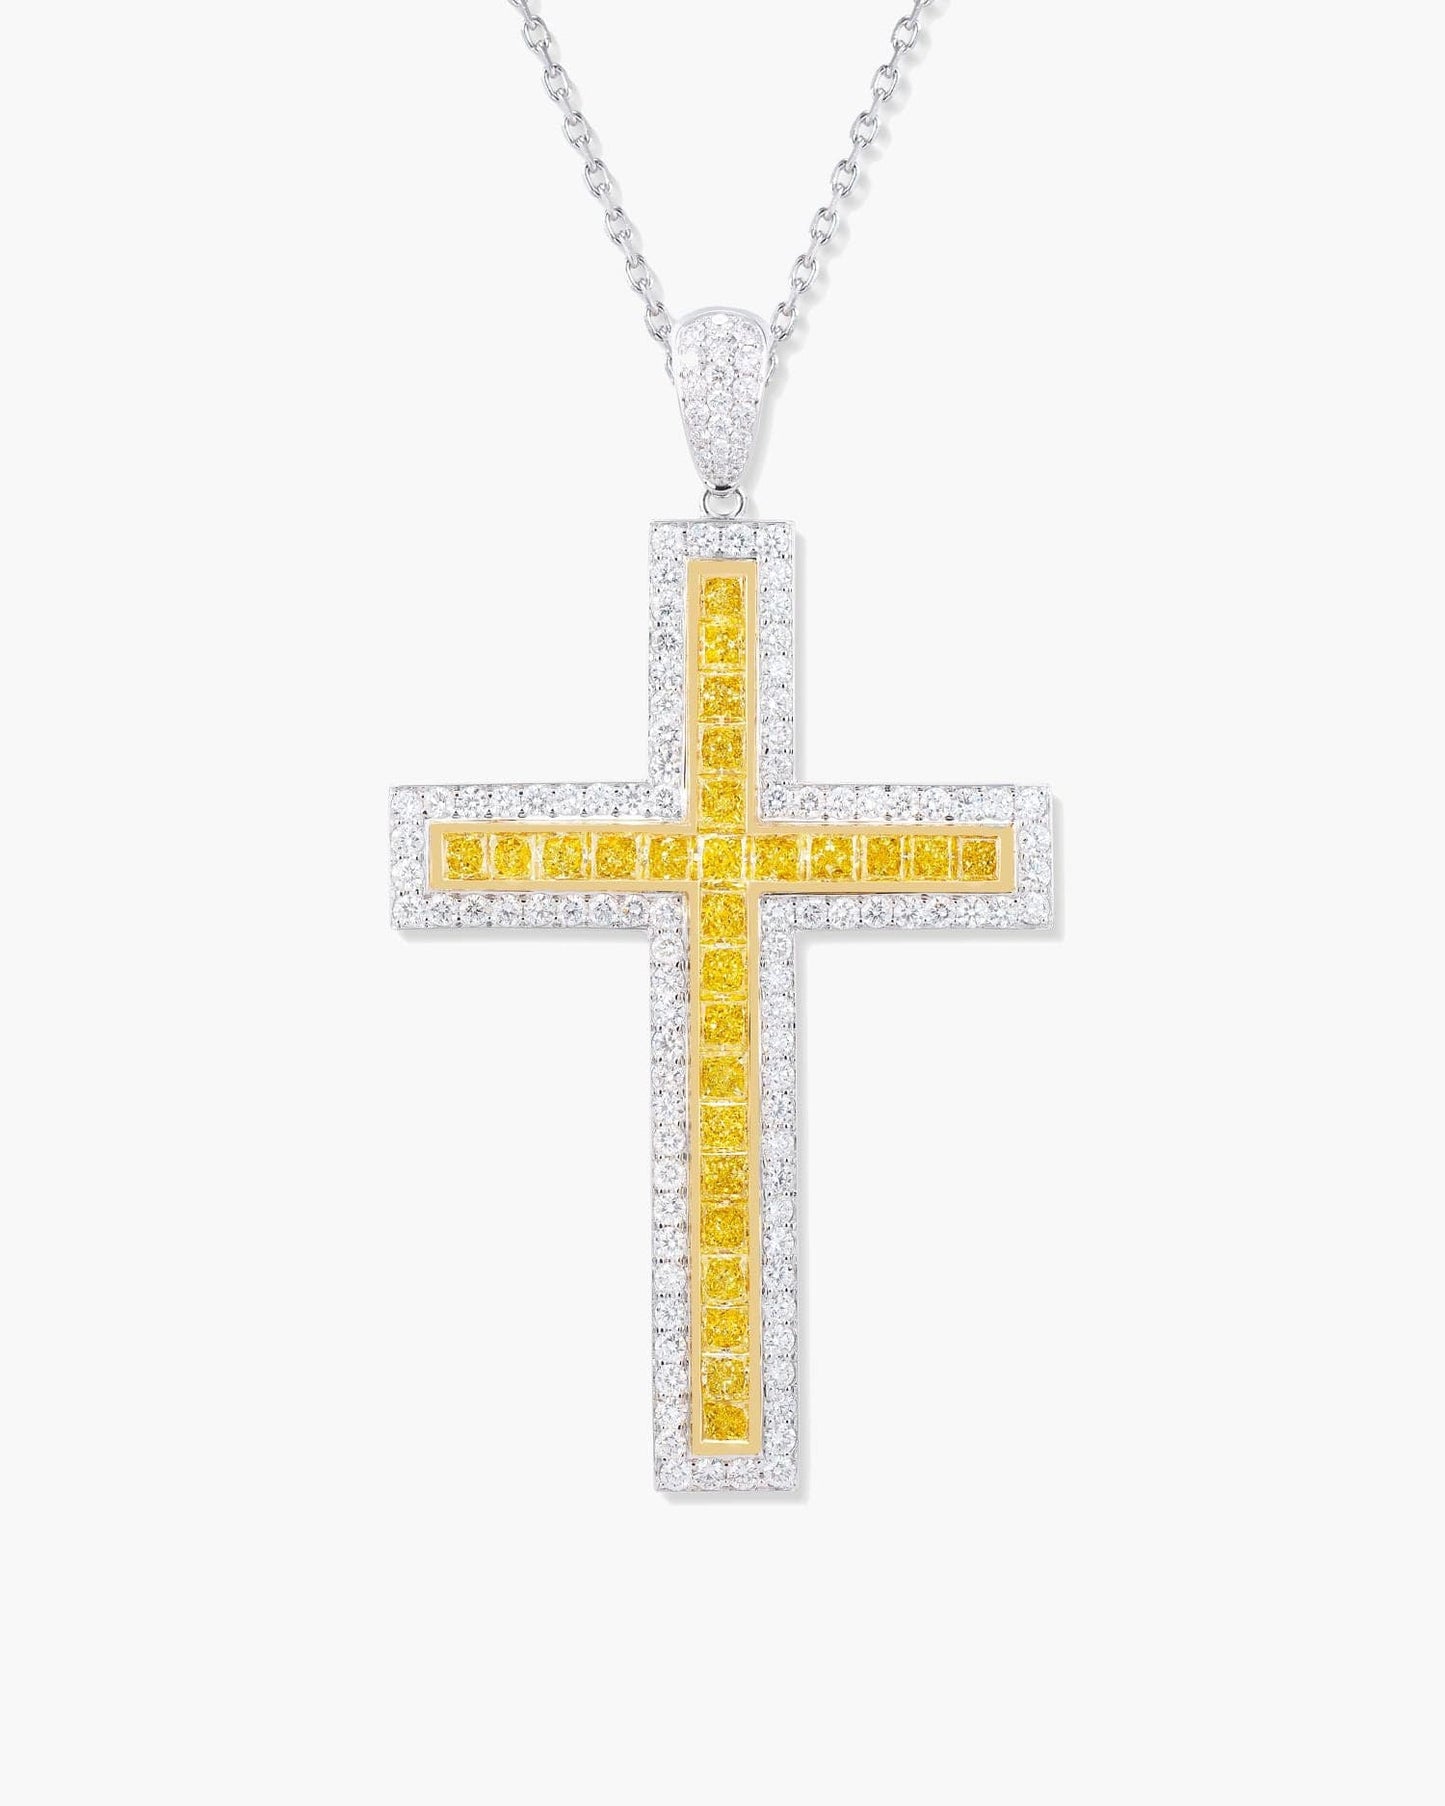 Princess Cut Yellow and White Diamond Cross Pendant Necklace, 7.39 carats